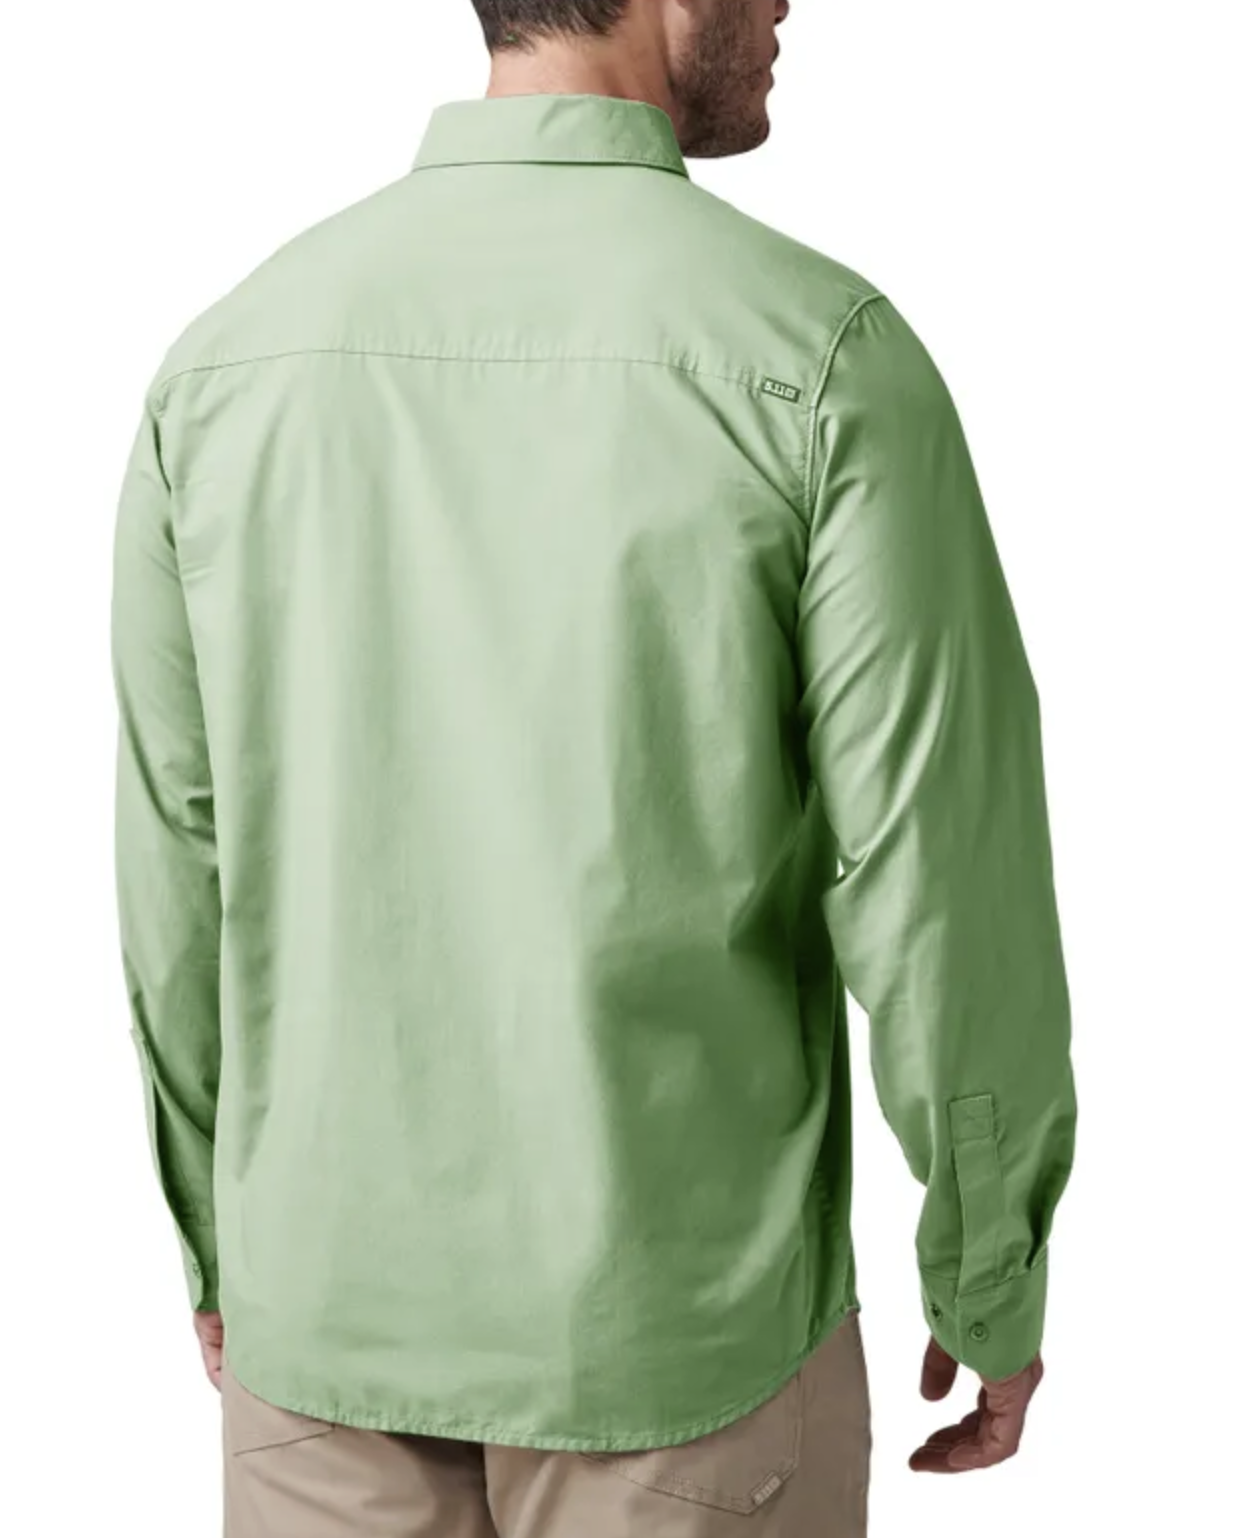 5.11 - Igor Solid Long Sleeve Shirt - Desert Sage (512)